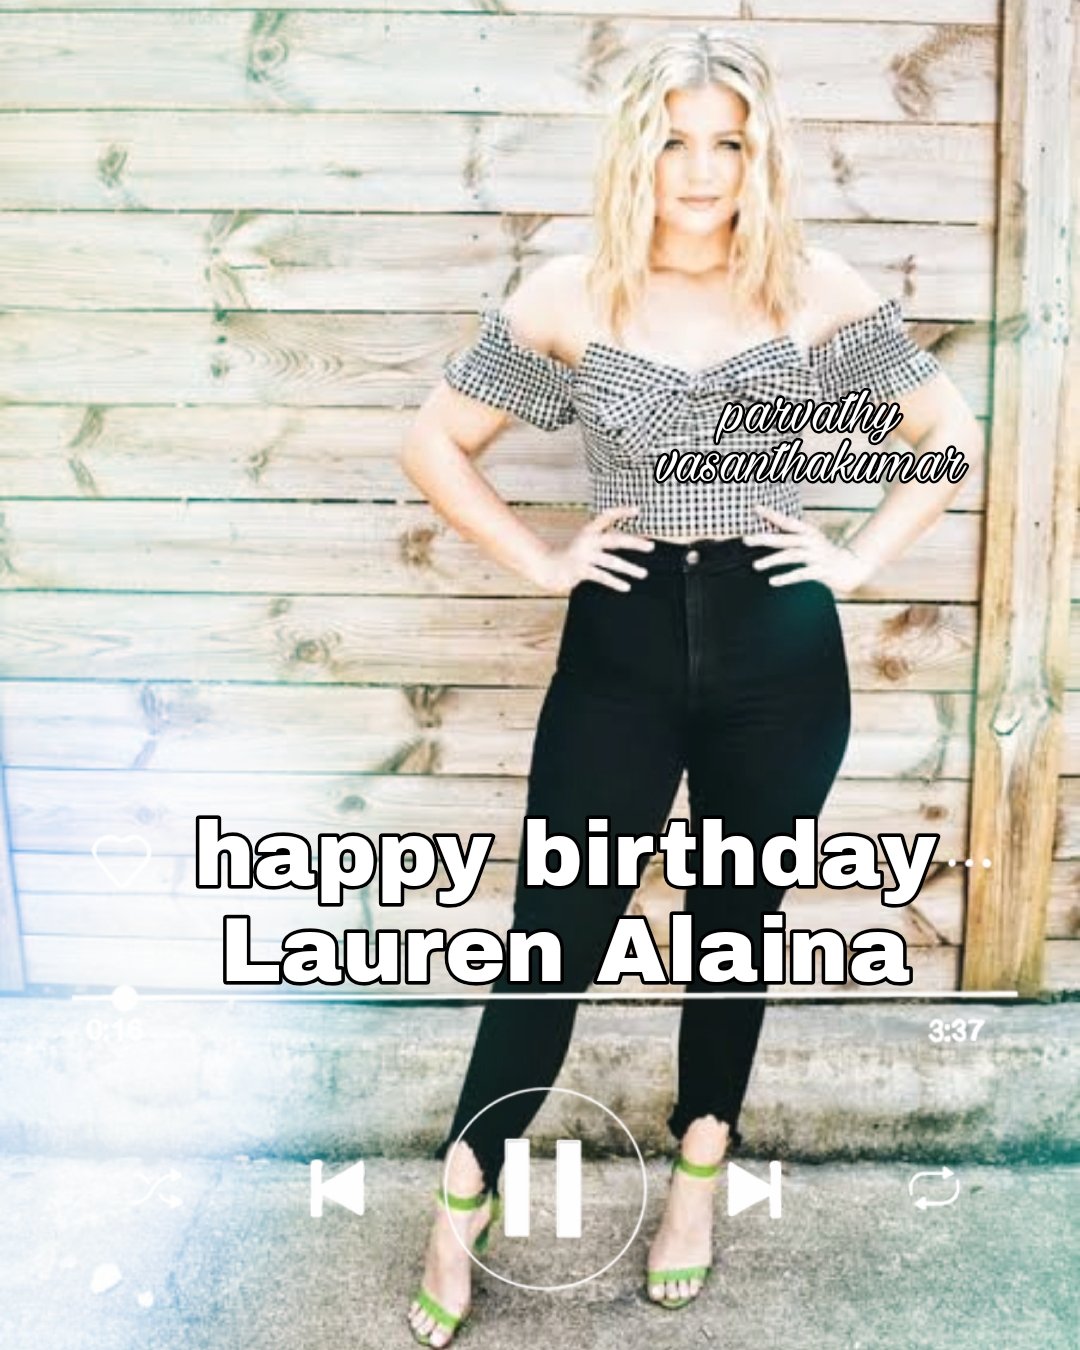 Happy birthday Lauren Alaina 